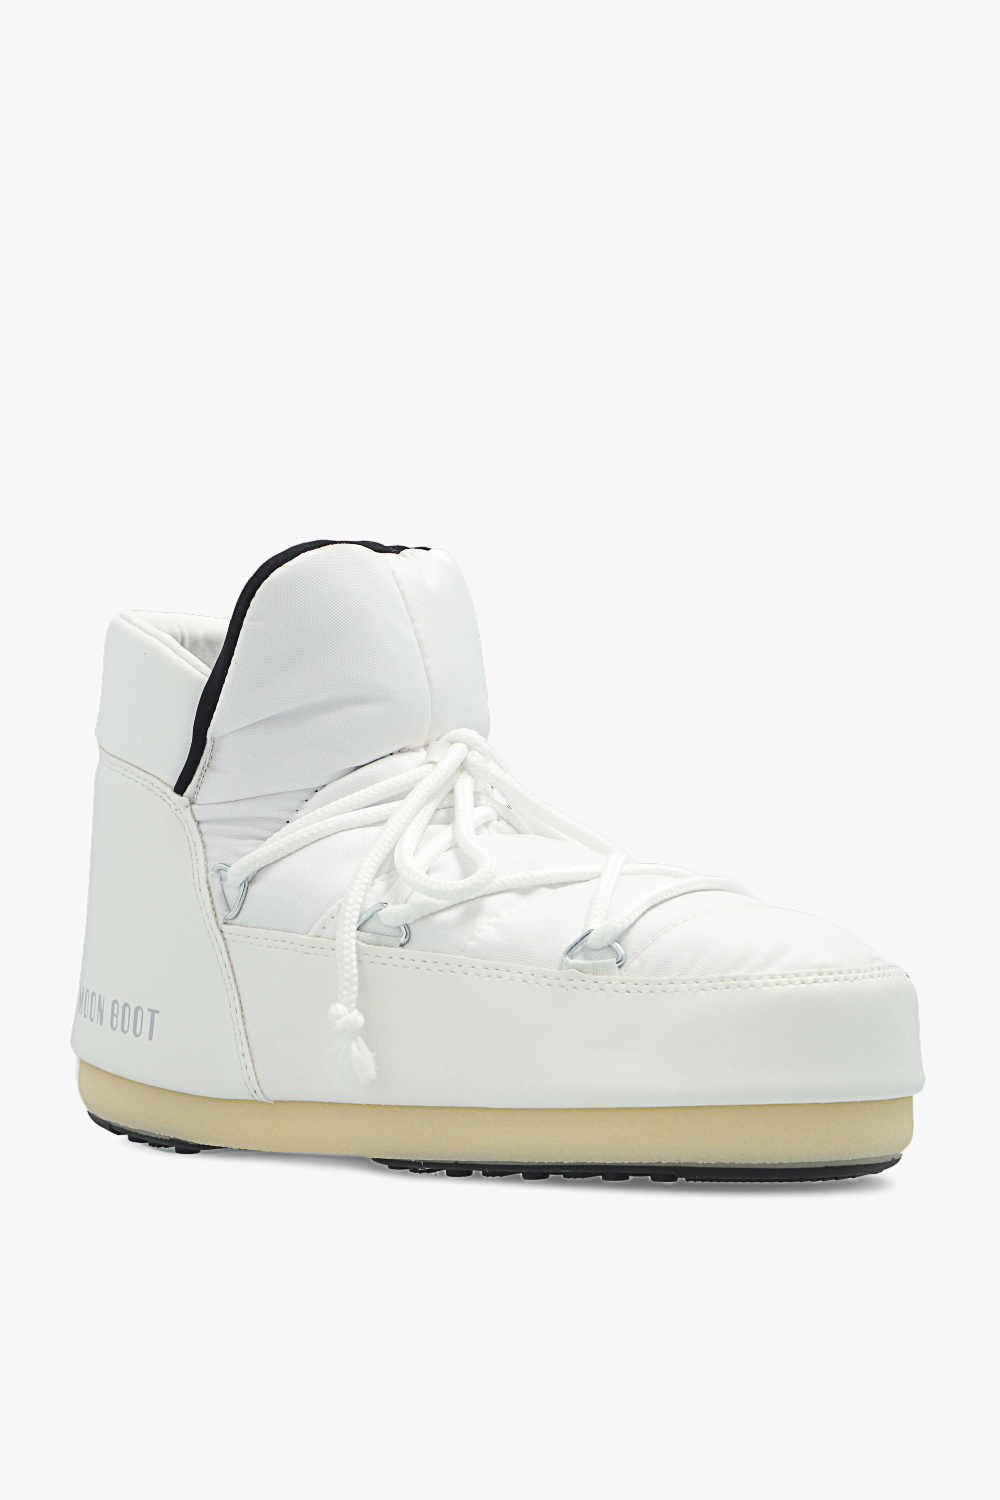 Moon Boot ‘Pumps Nylon’ snow boots